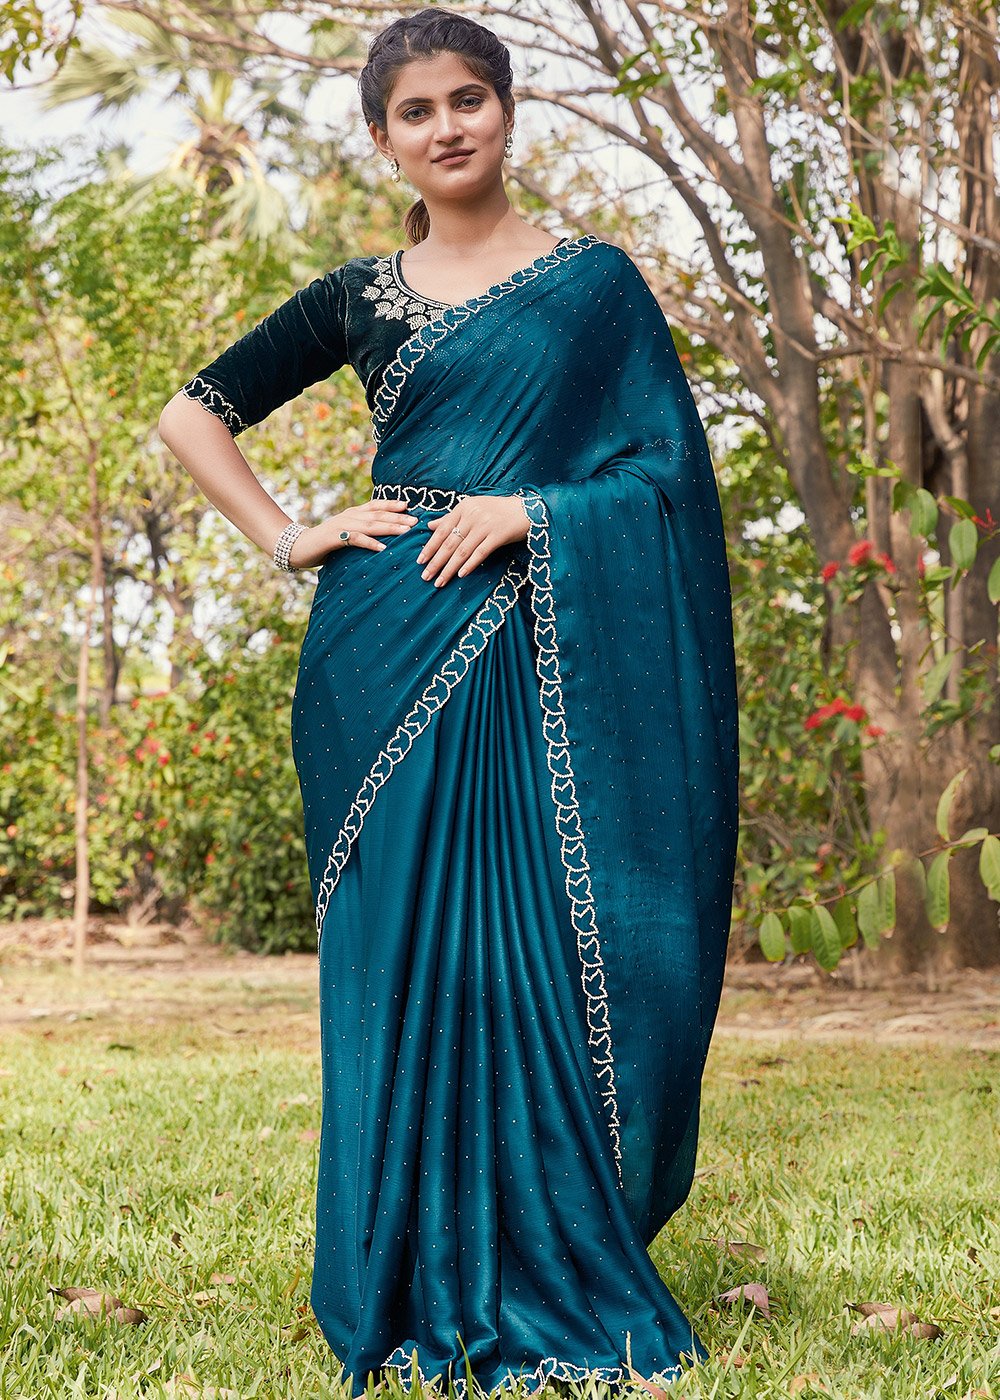 HIRAL DESIGNER Choli Top Saree Blouse Readymade Indian Silk & All Sari  Color Matching Blouse (Blue, 30) at Amazon Women's Clothing store